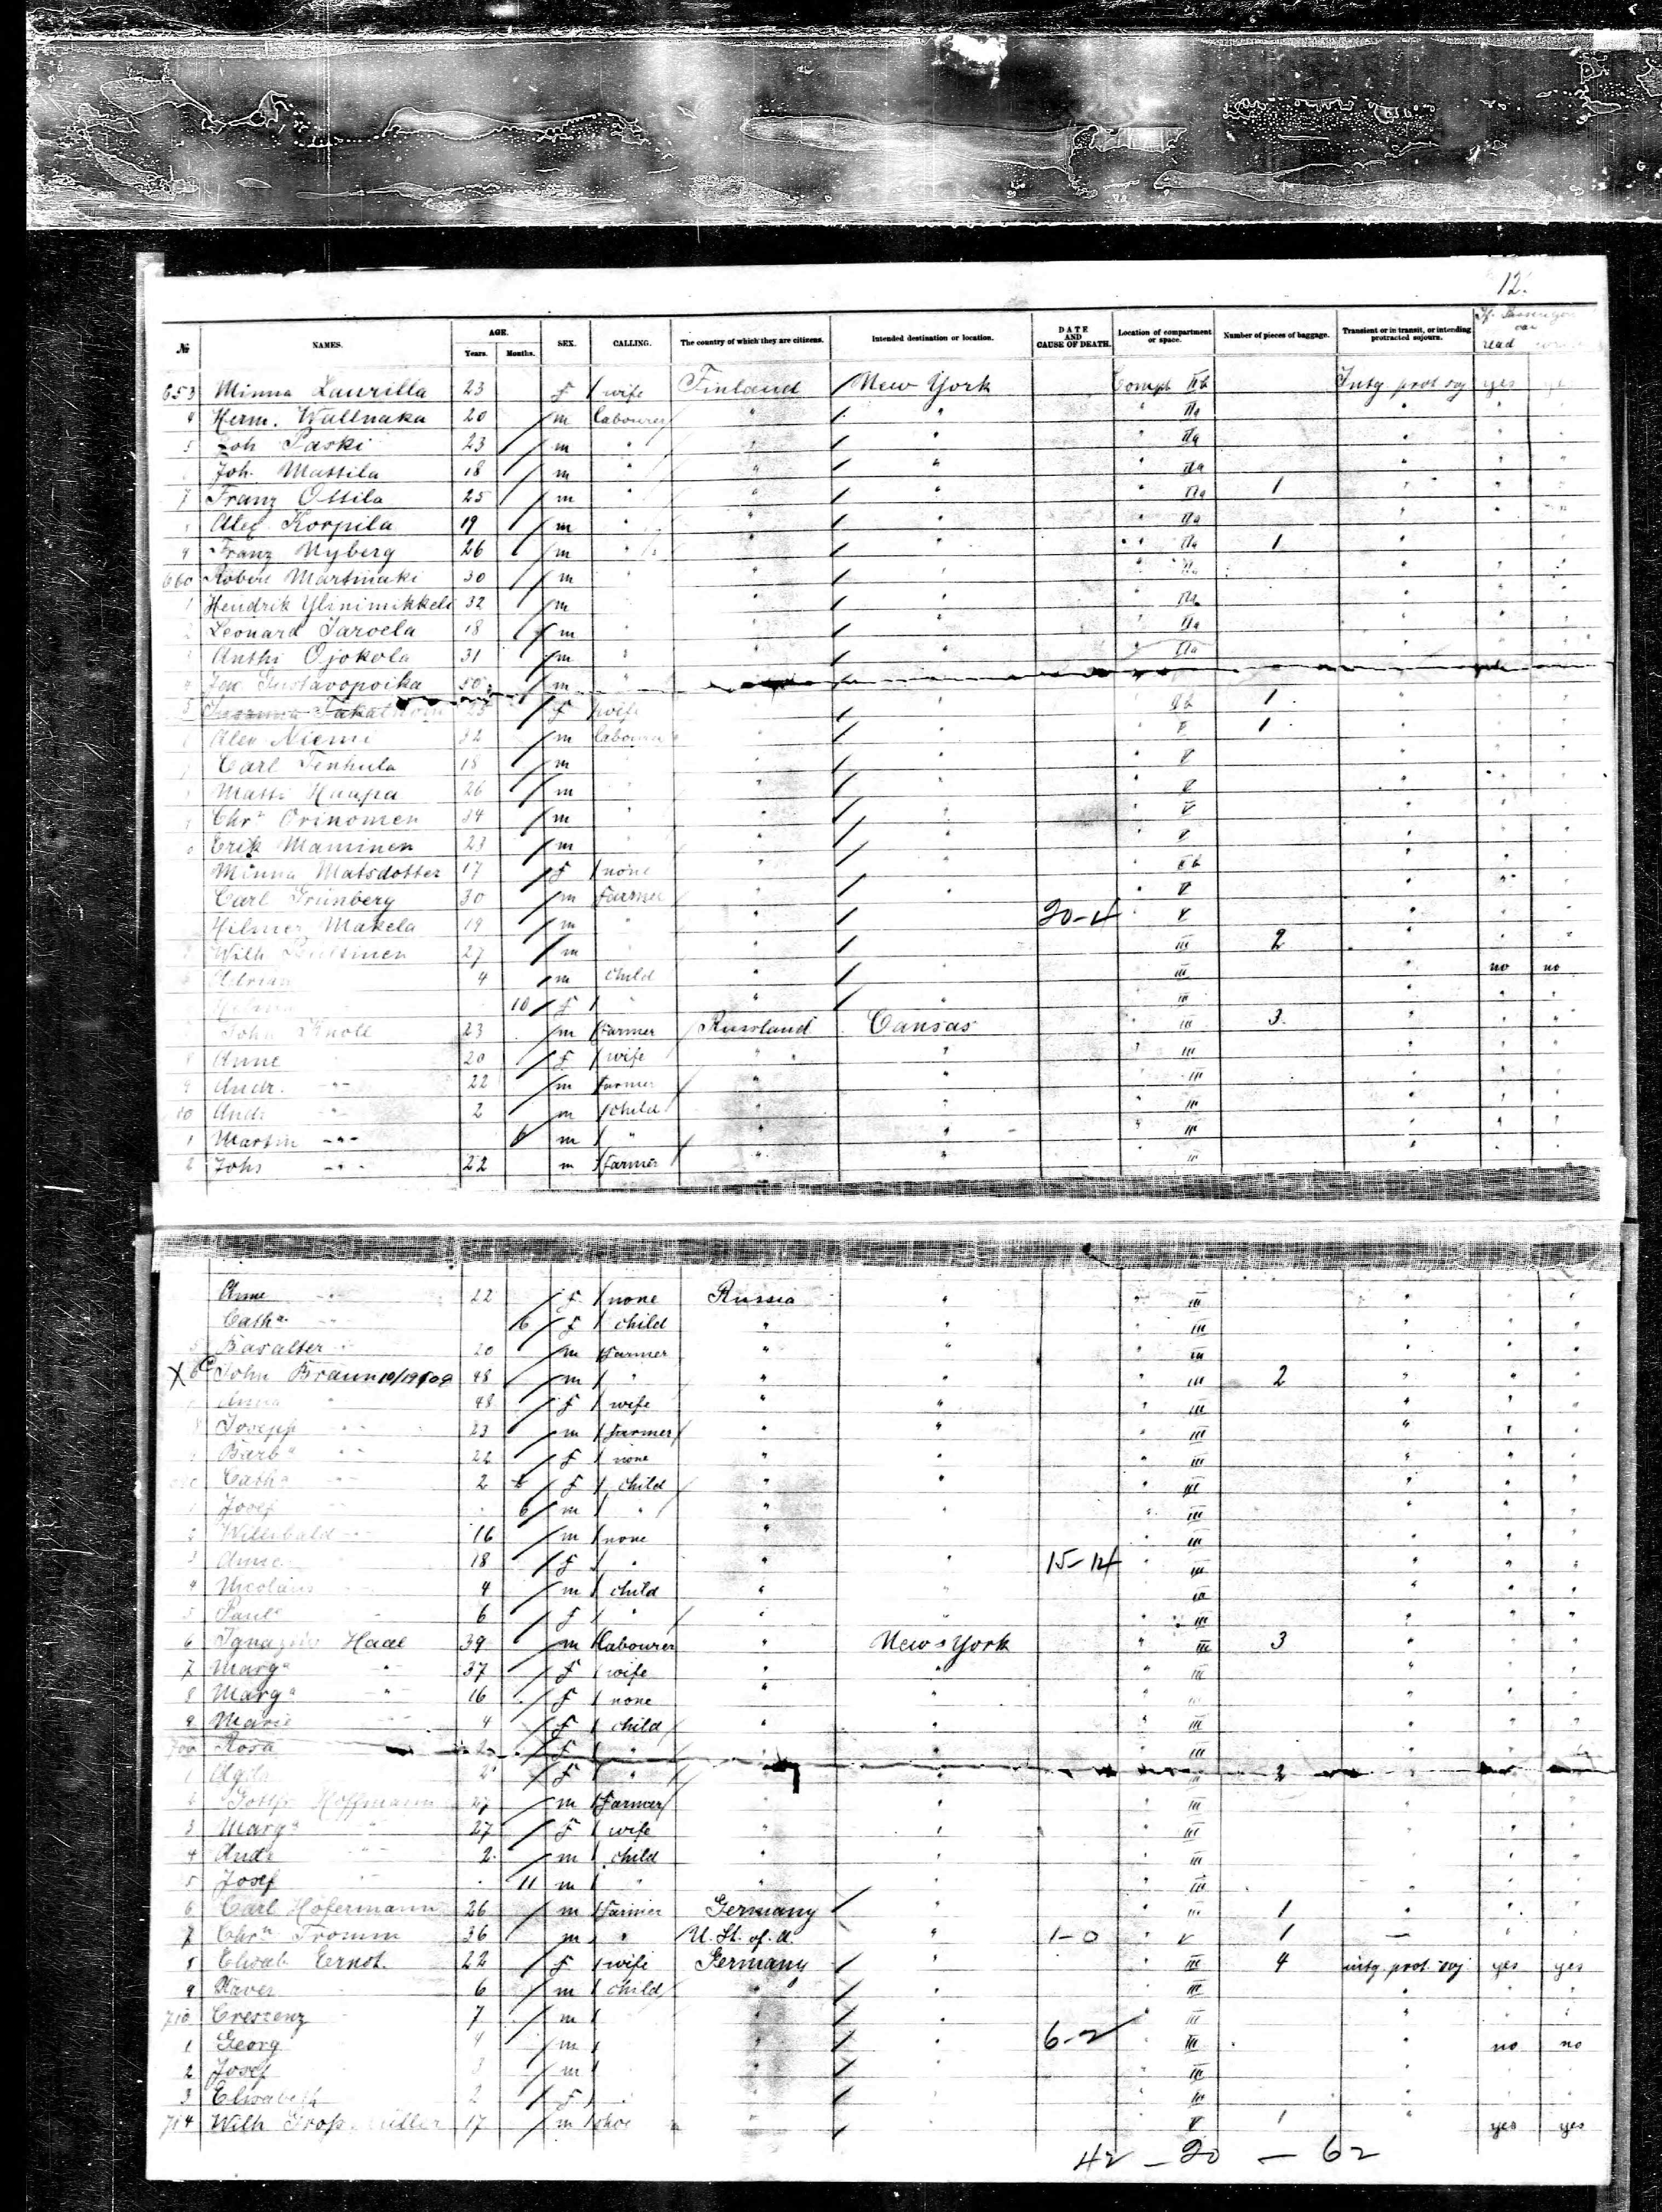 Passengers' list, including the Gottfried Hoffman family